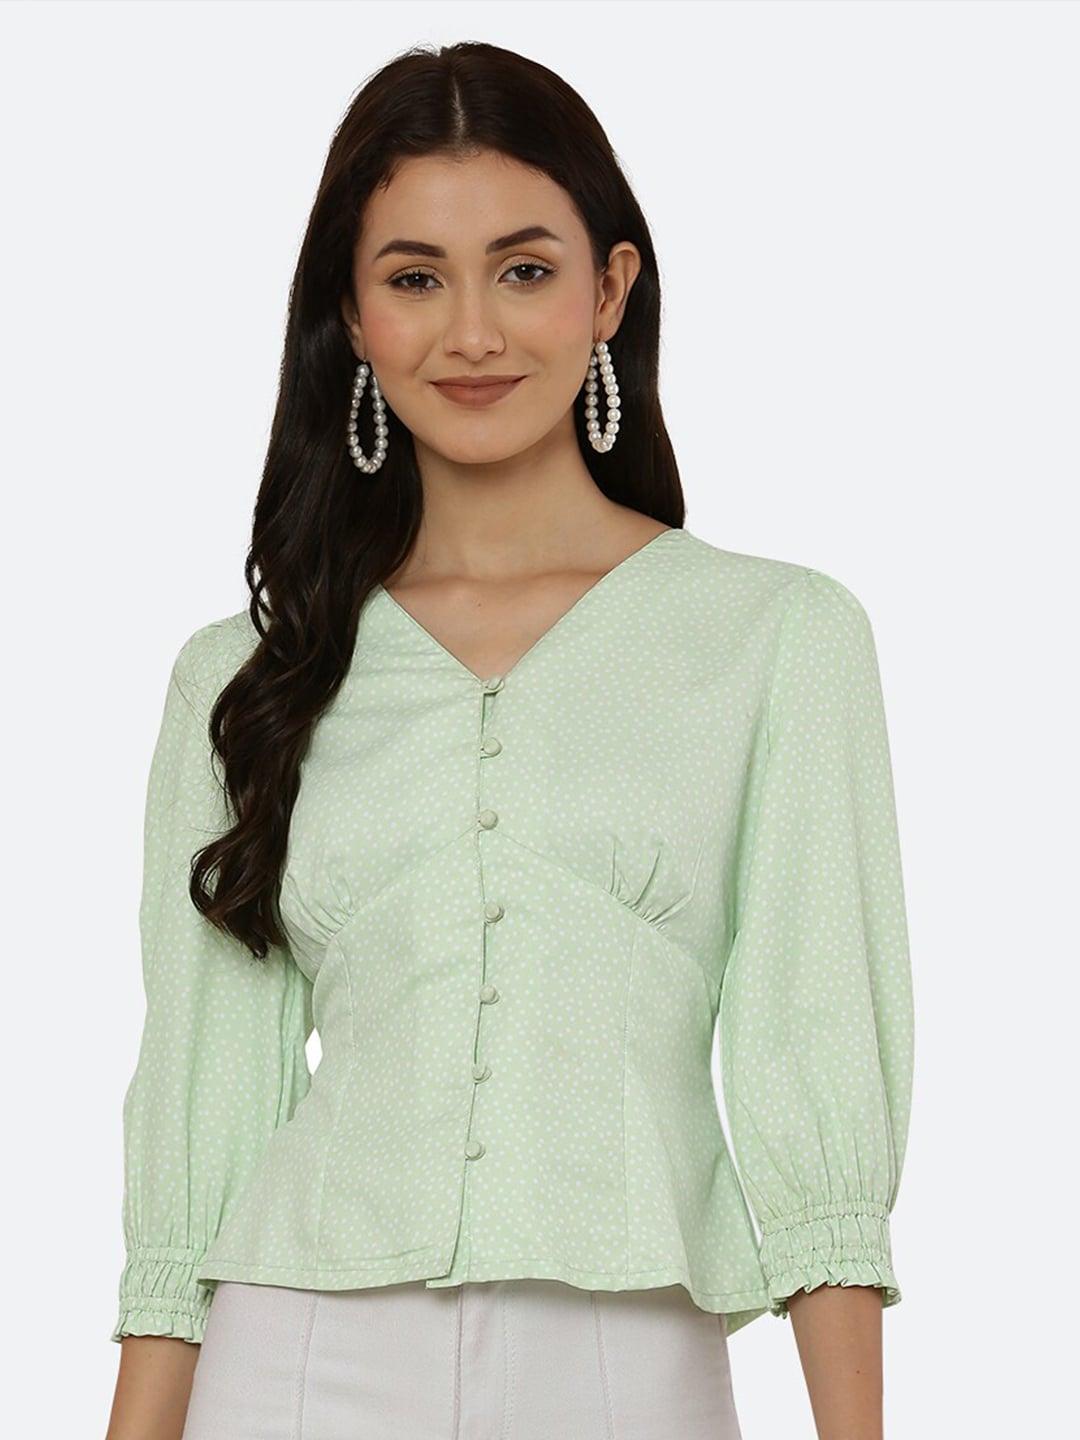 raassio green printed puff sleeves shirt style top